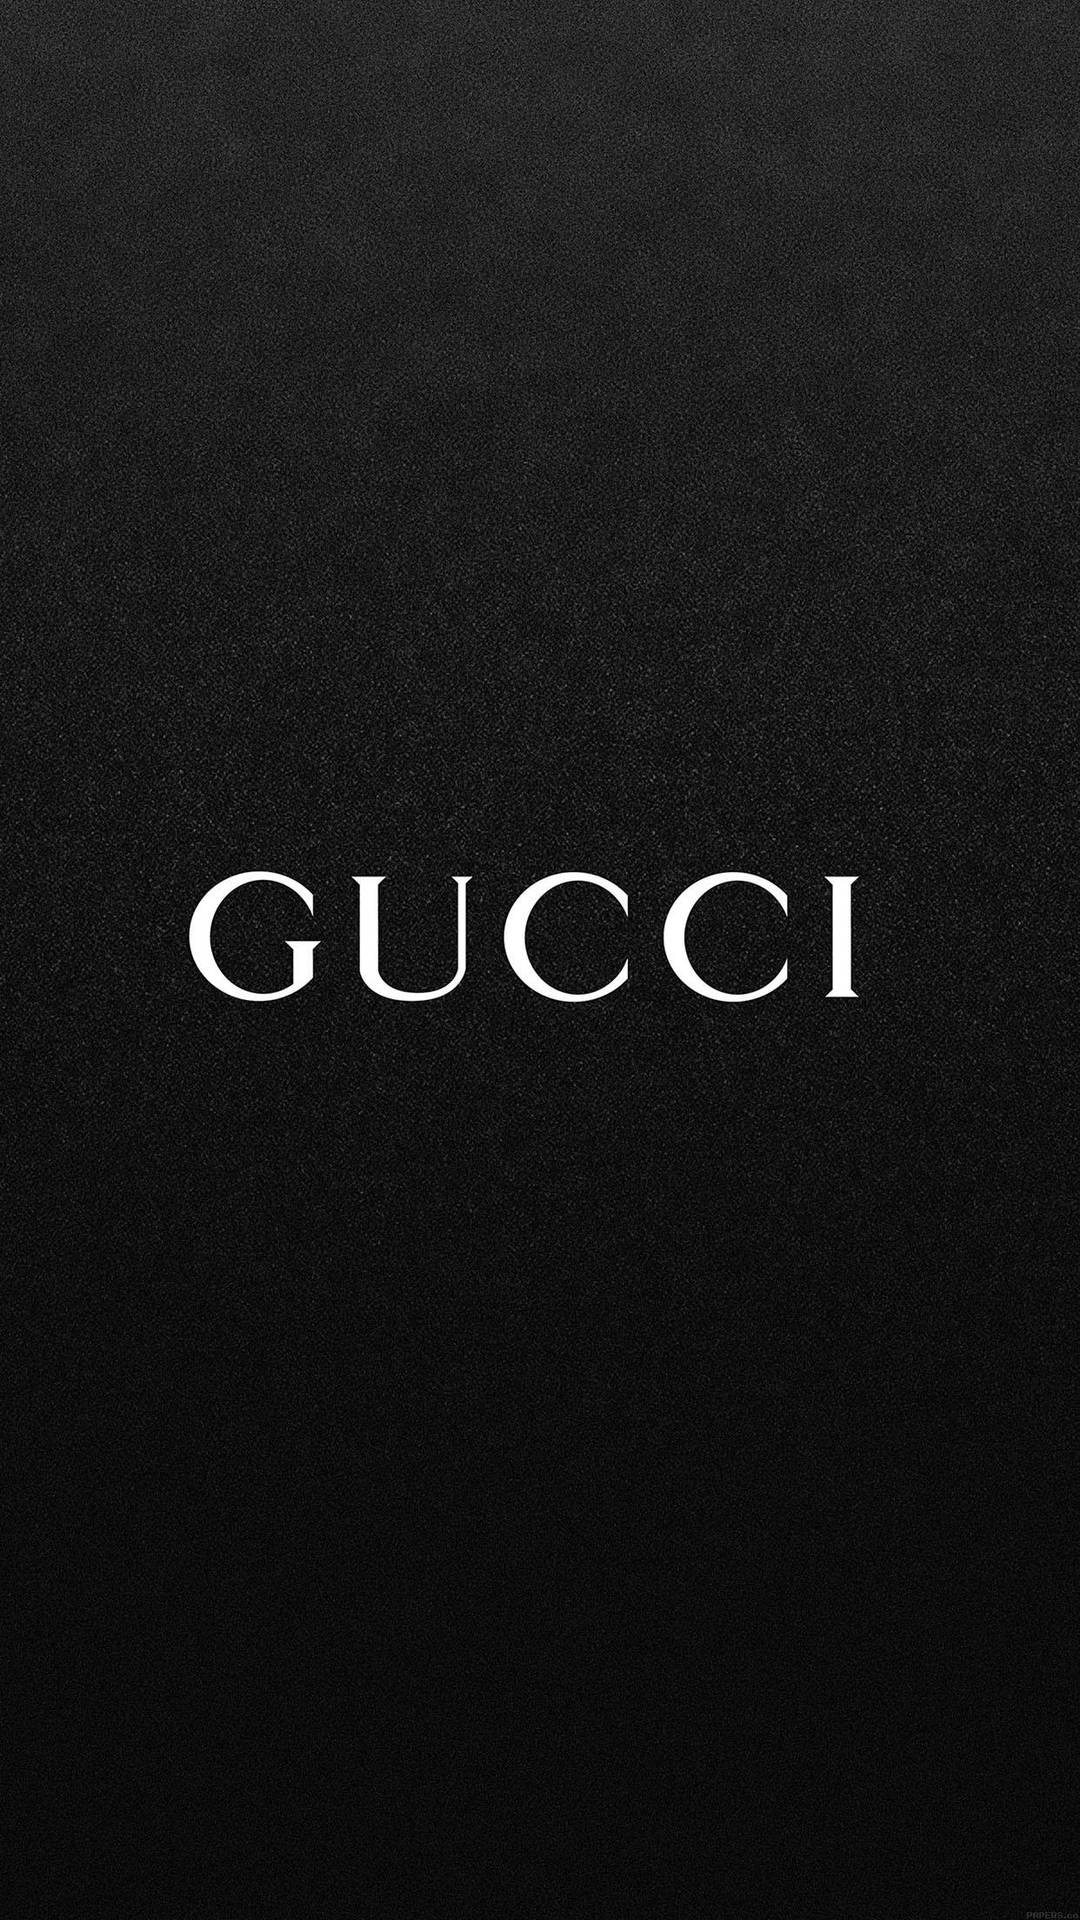 Fondode Pantalla Simple De Gucci Para Iphone. Fondo de pantalla